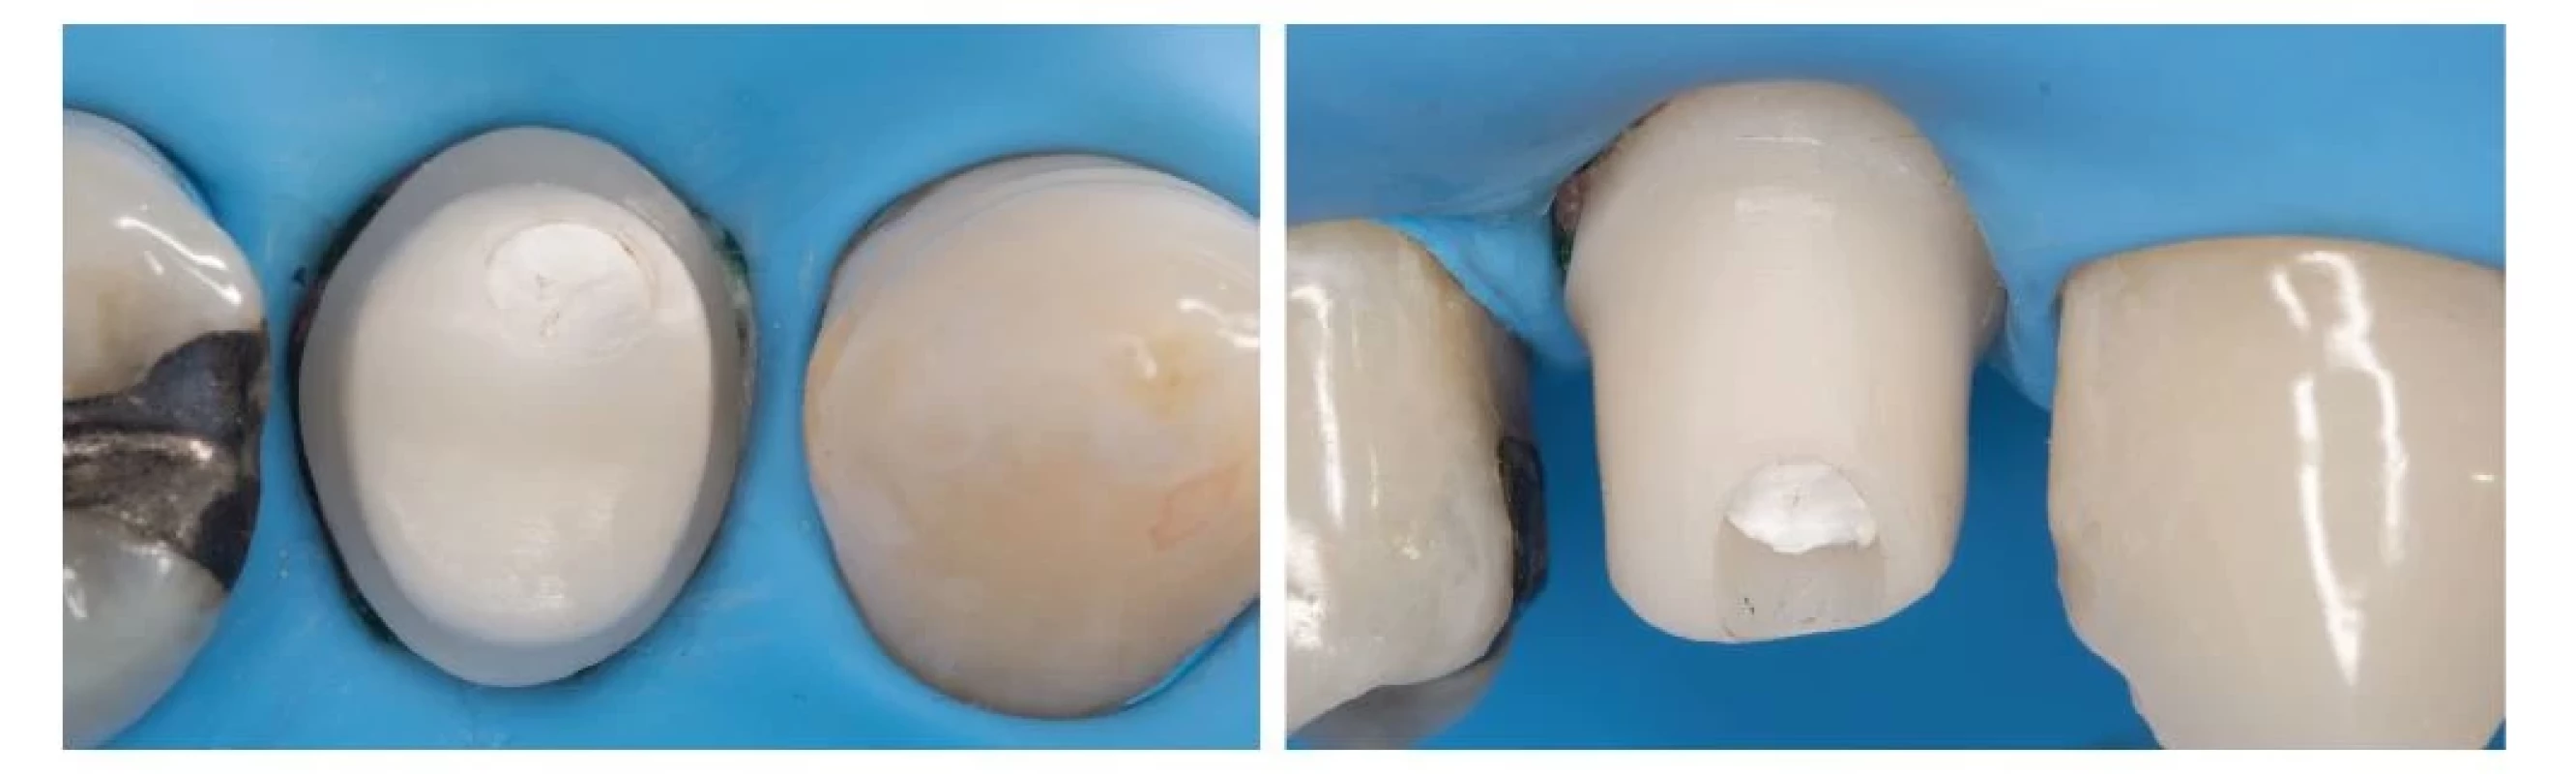 Fixácia korunky na implantát
s použitím kofferdamu
a individálne zhotoveného
ZrO abutmentu.<br>
Fig. 7
Fixation of implant crown
using rubber dam and custommade
zirconia abutment.